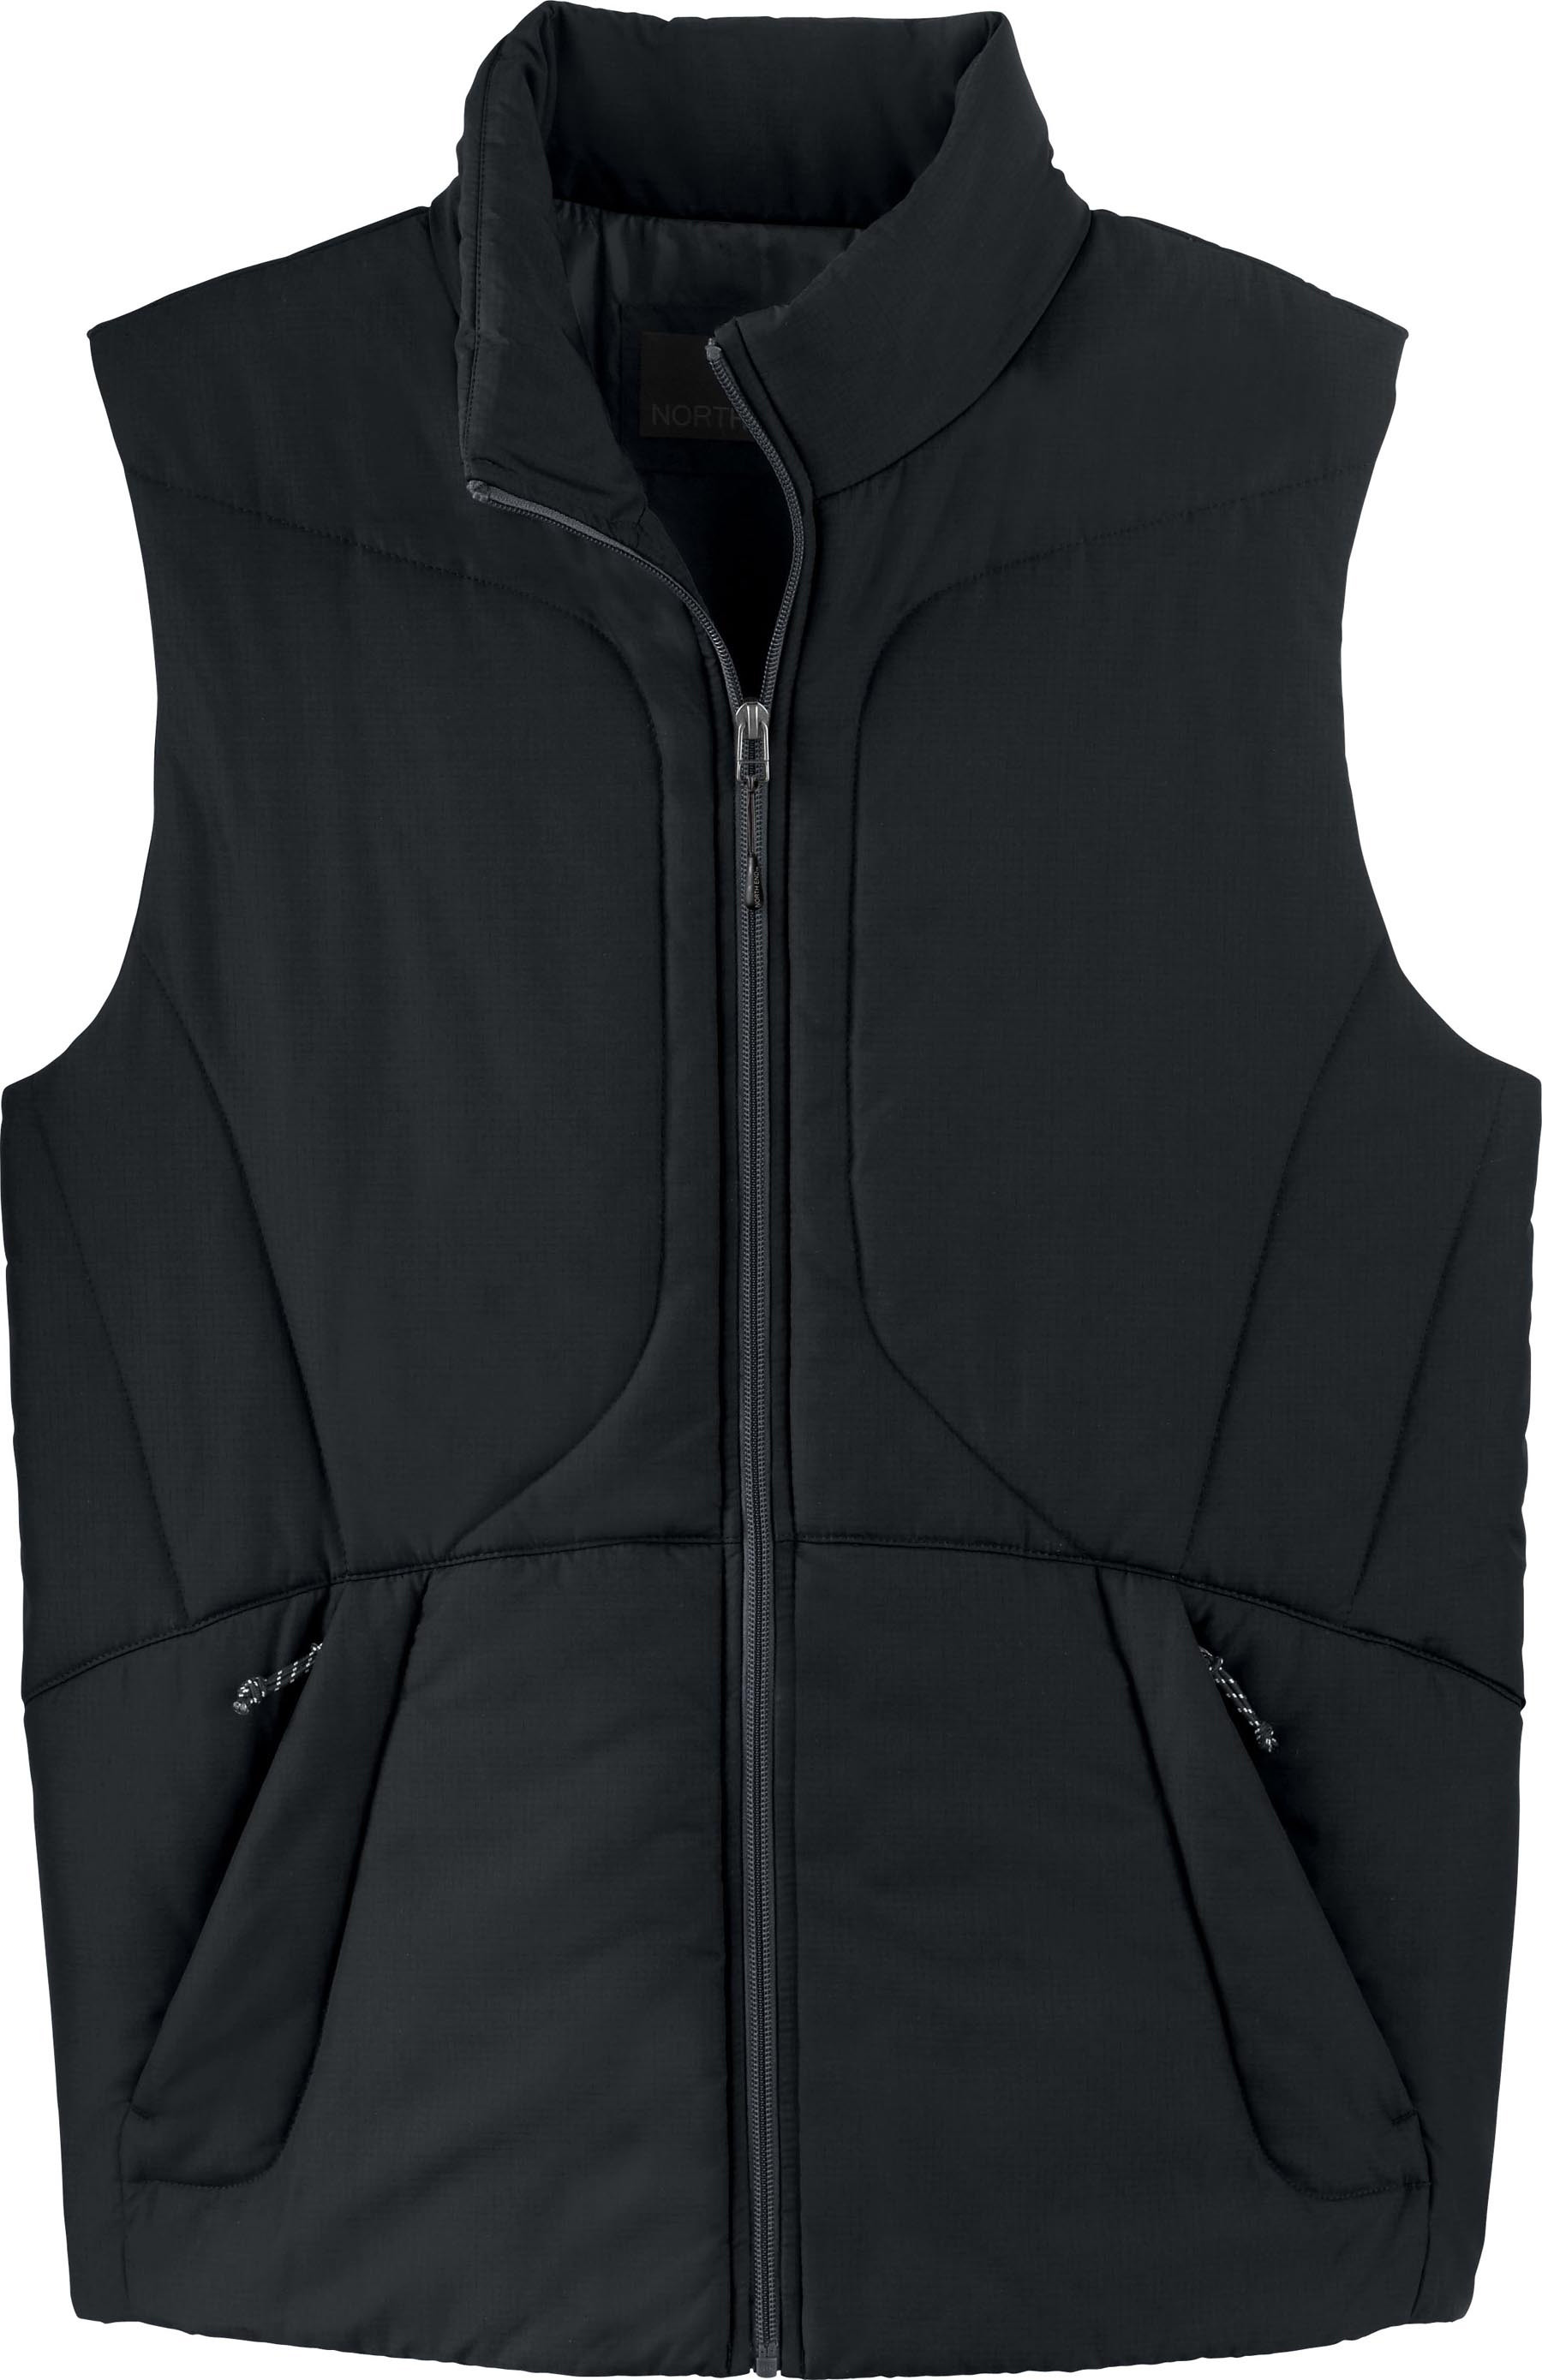 Ash City UTK 1 Warm.Logik 88160 - Men's Polyester Ripstop Insulated Vest